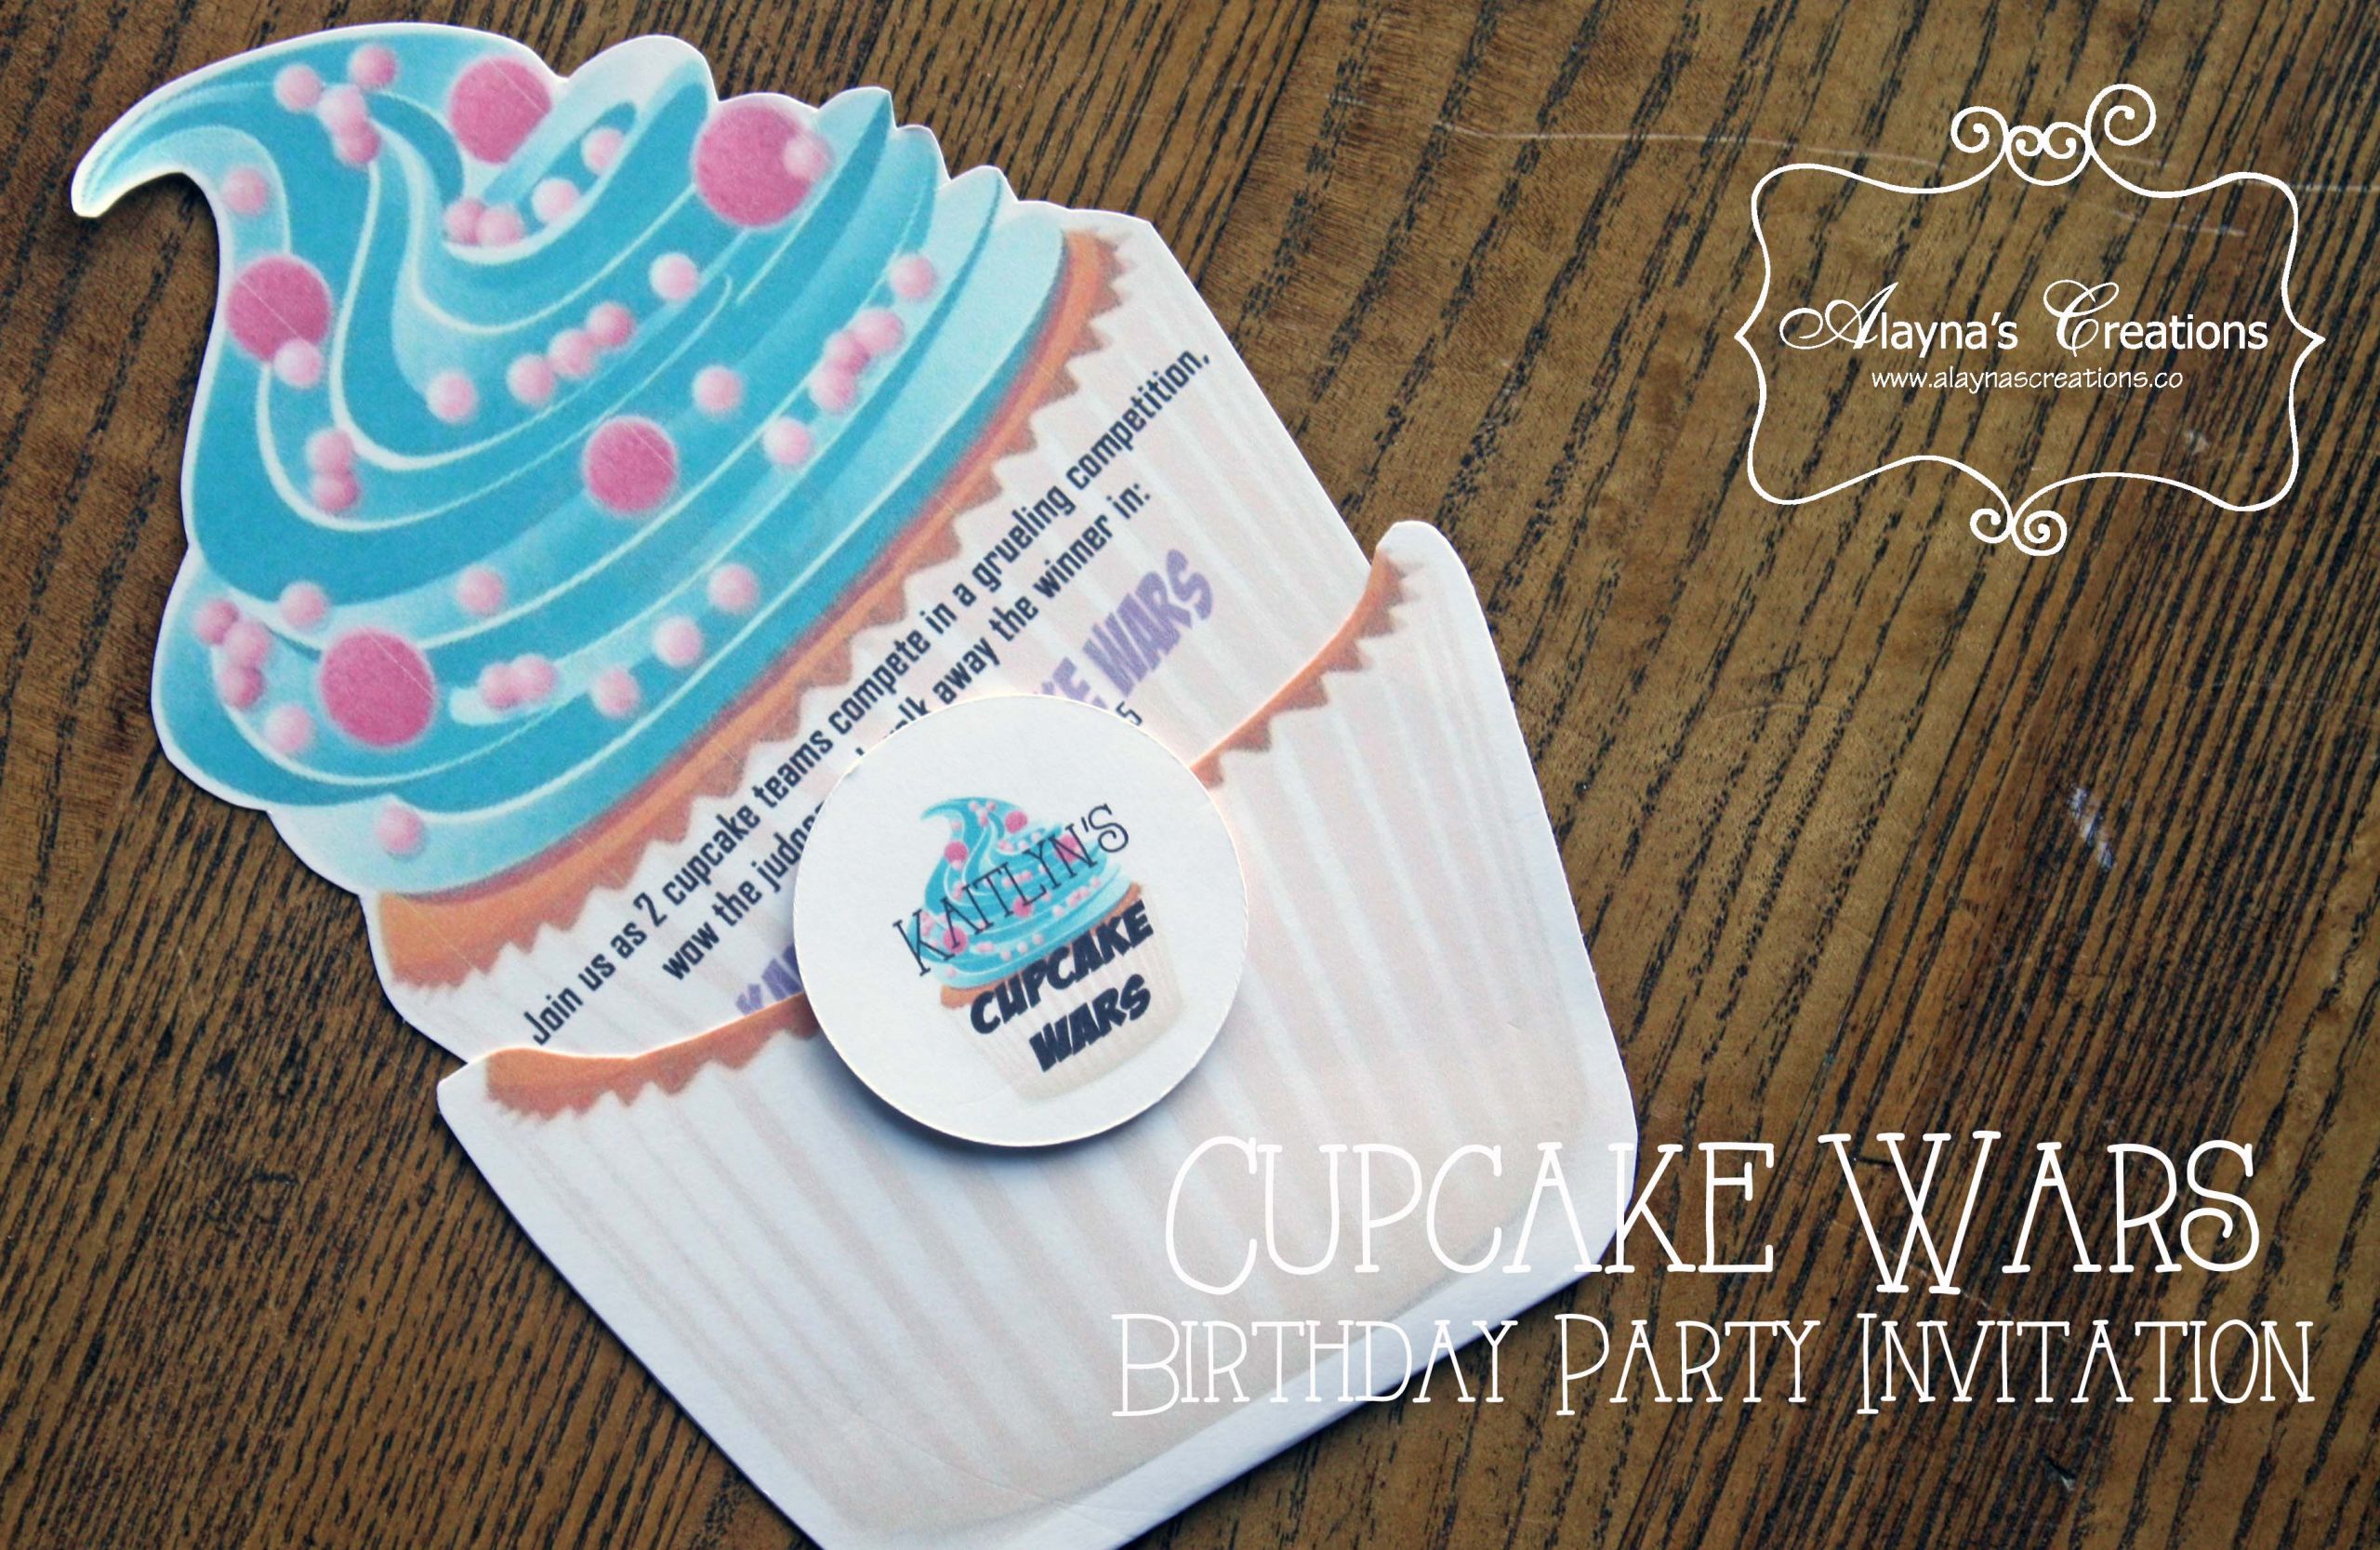 Cupcake Wars Birthday Party
 Cupcake Wars Birthday Party – alaynascreations